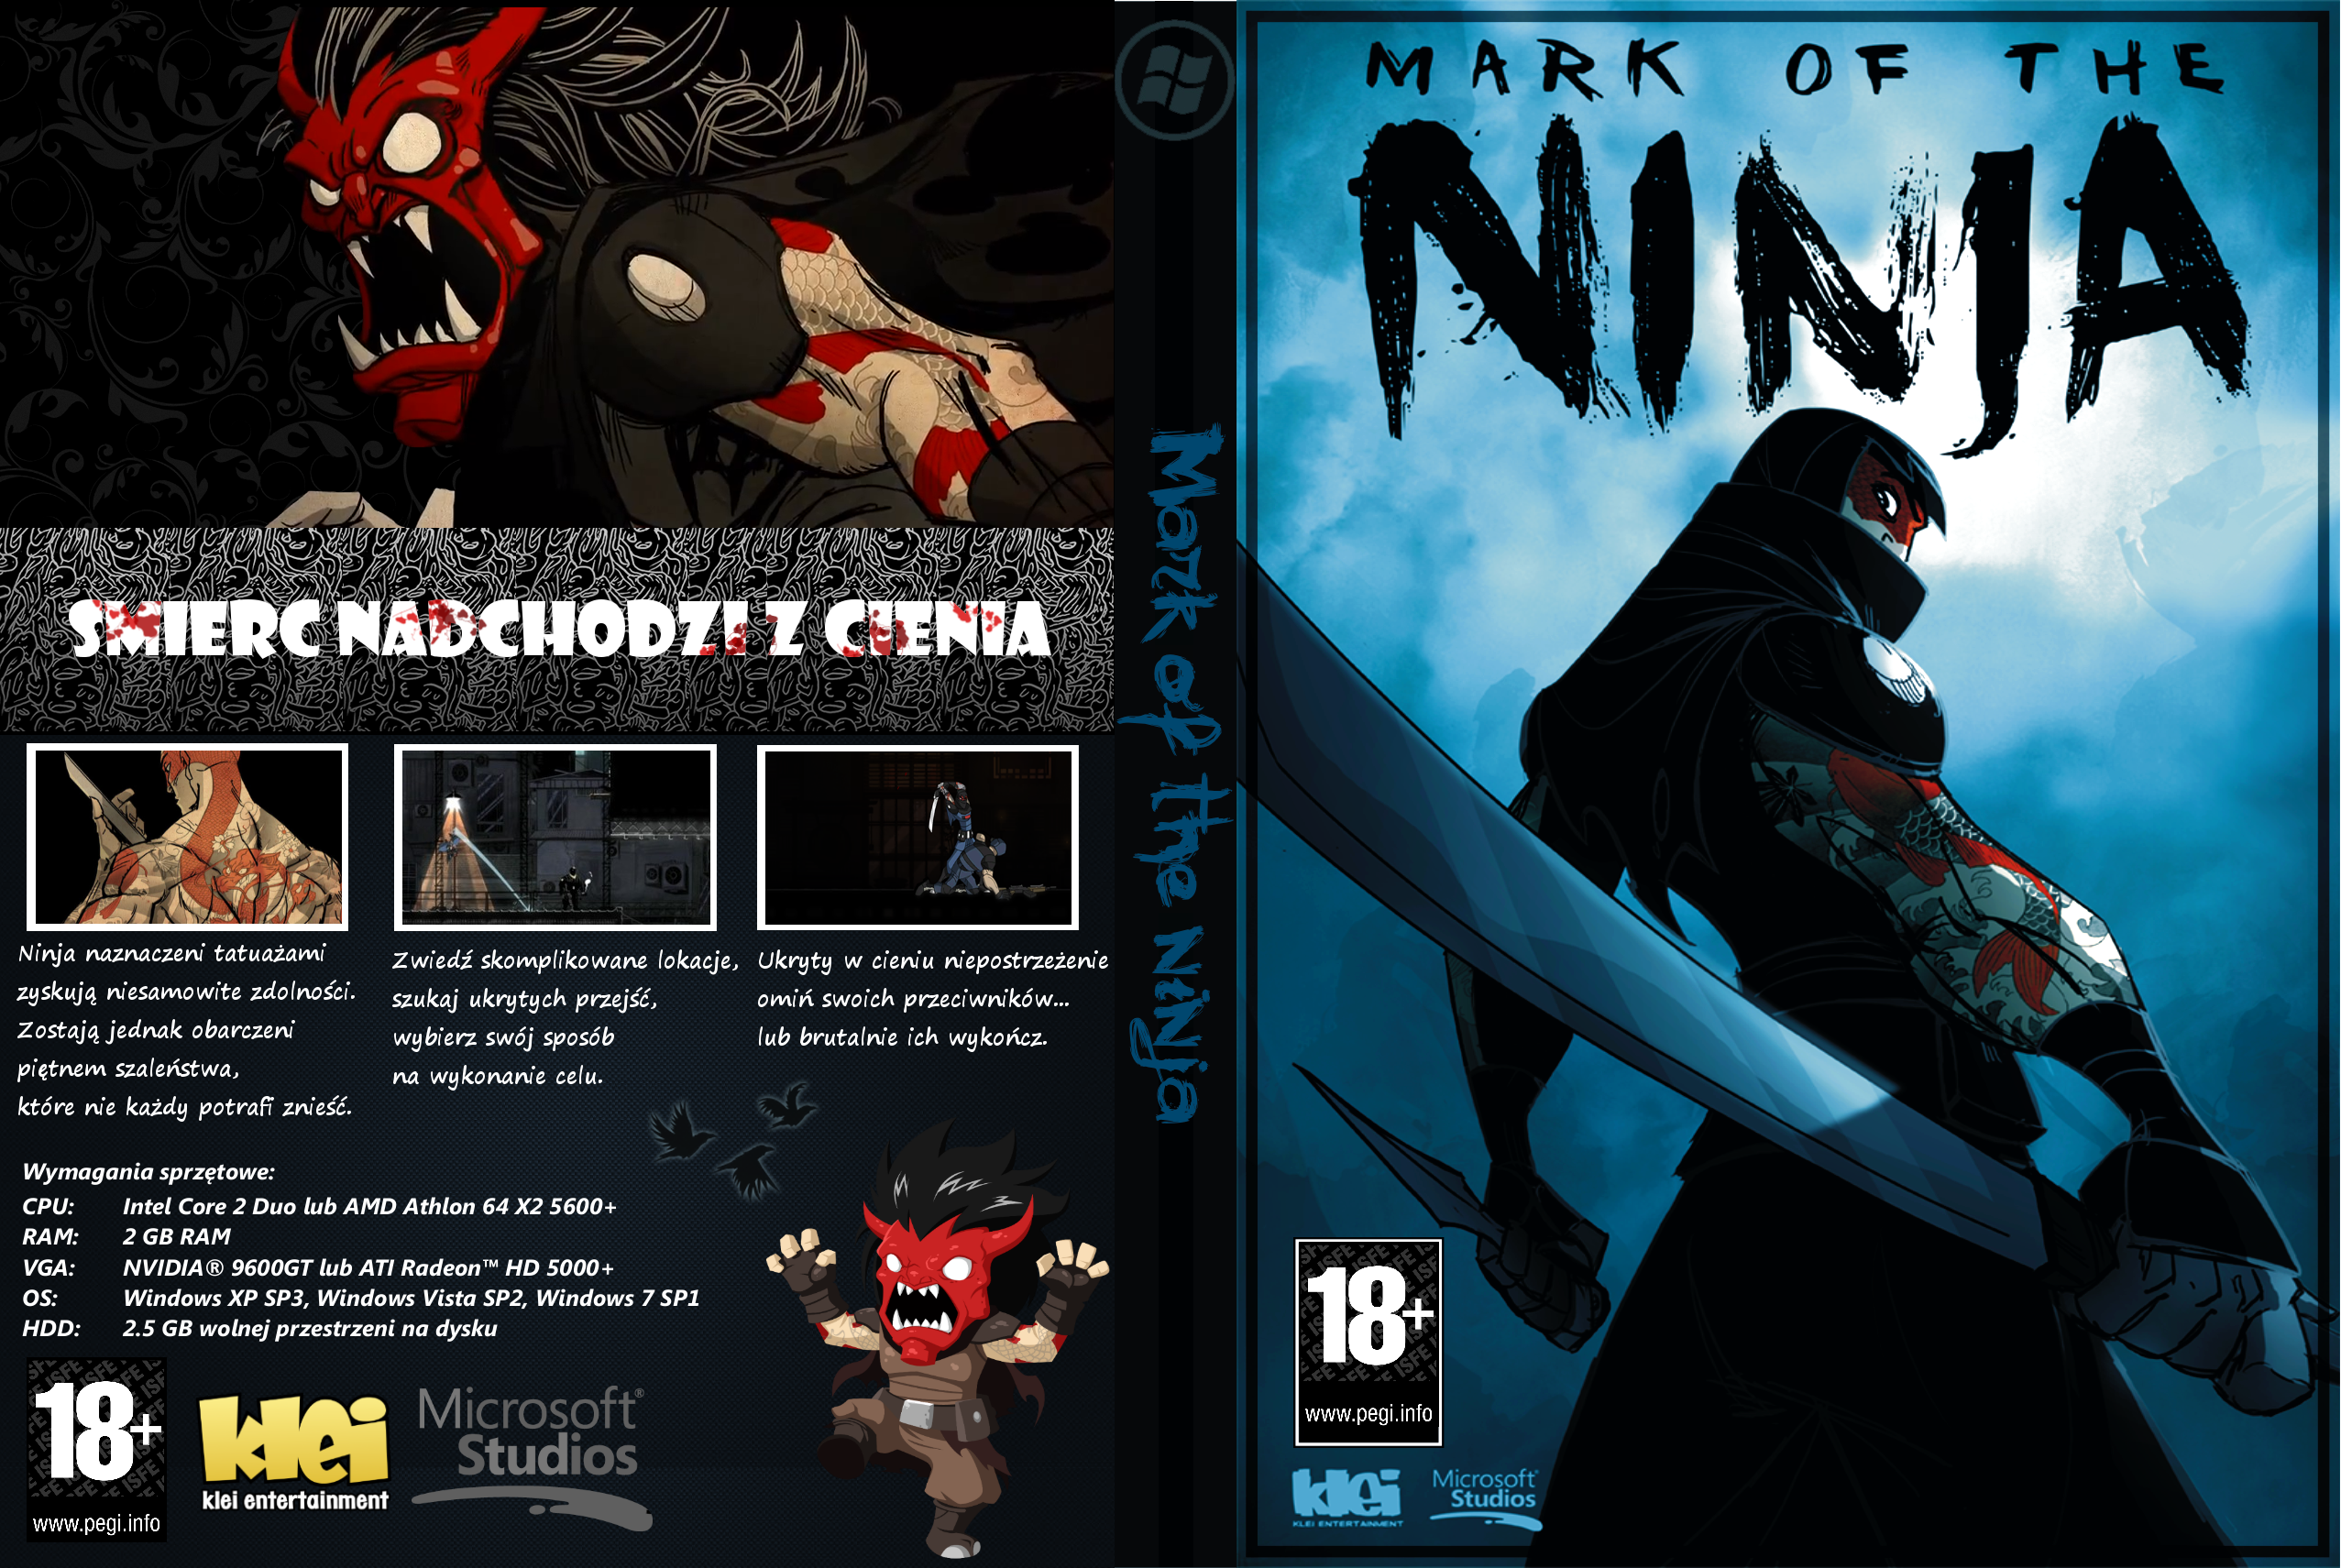 Mark of the ninja box cover